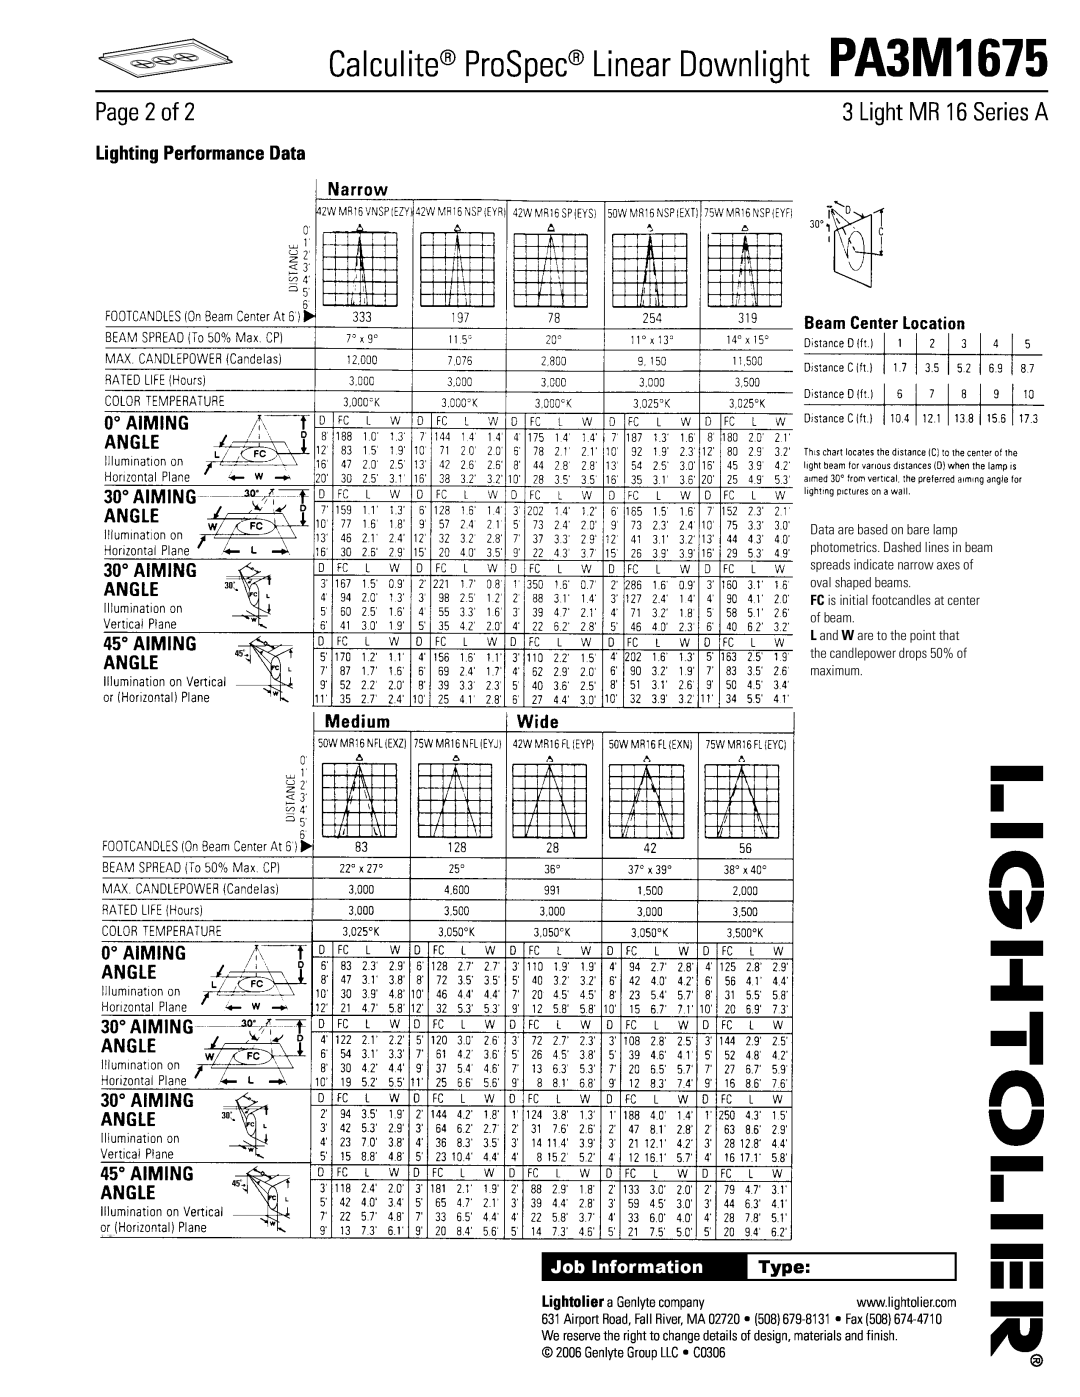 Lightolier Page 2 of, Lighting Performance Data, Type, Calculite ProSpec Linear Downlight PA3M1675, Job Information 